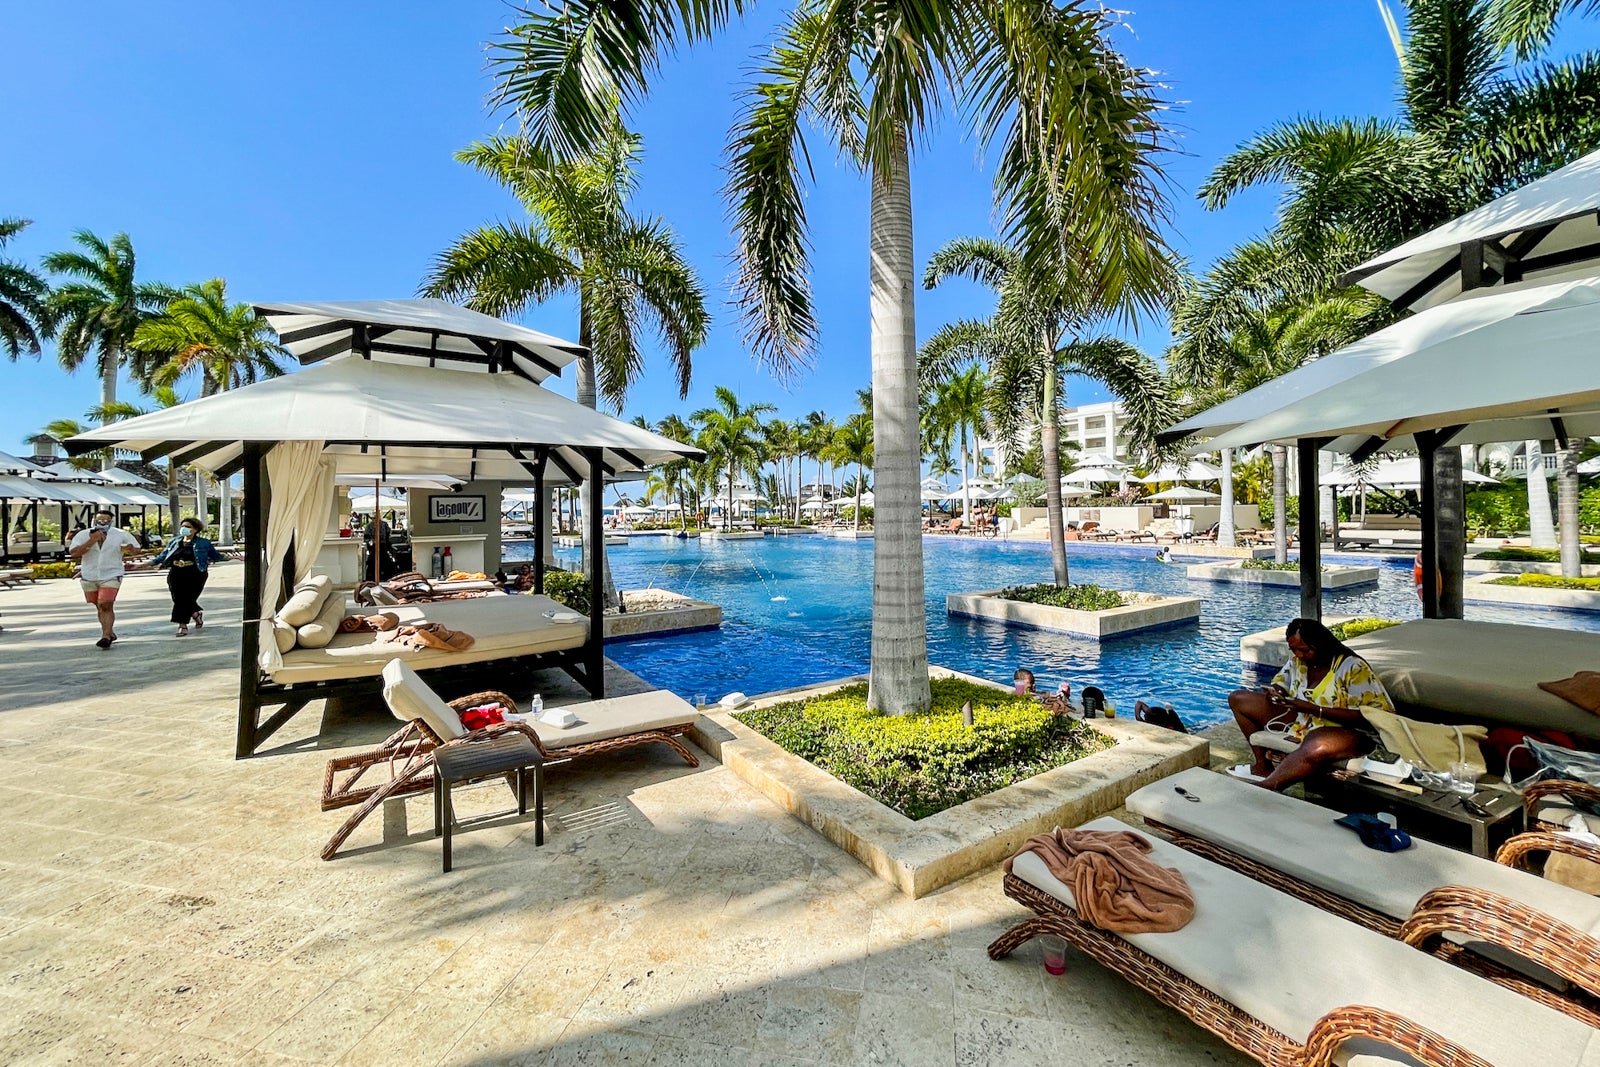 Cabanas near a hotel pool